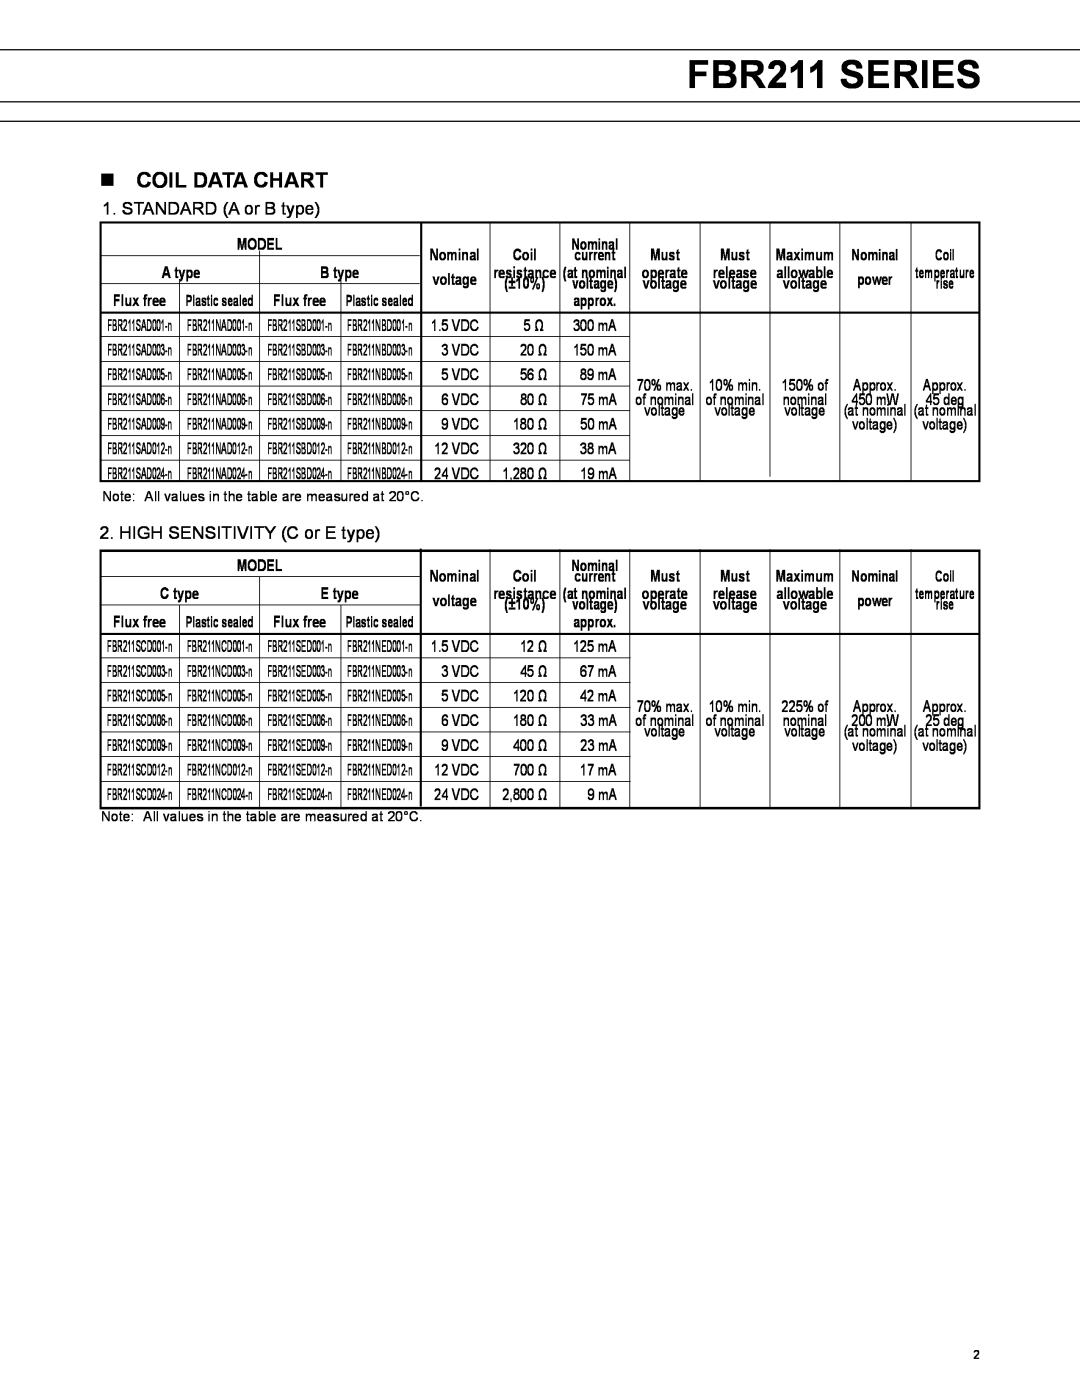 Fujitsu manual FBR211 SERIES, nCOIL DATA CHART 